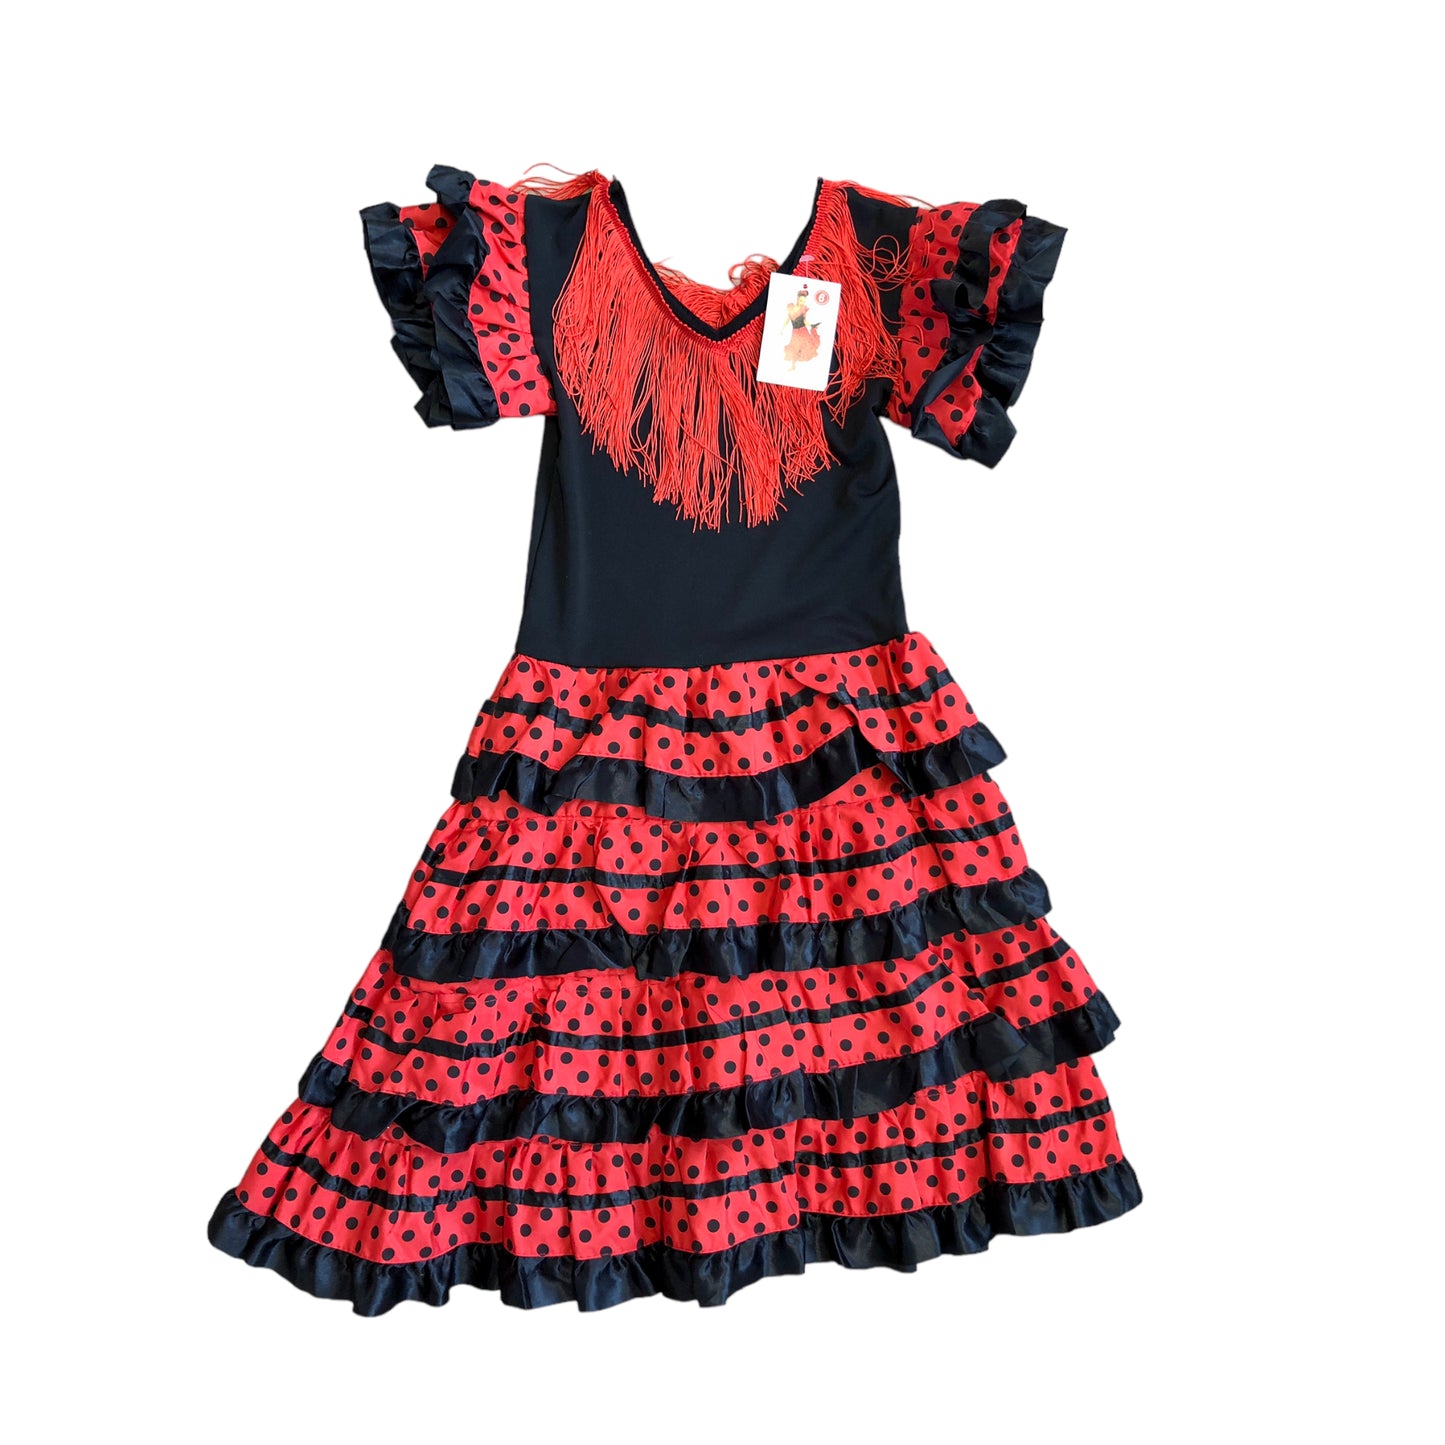 Black Spanish dress (6 years old)